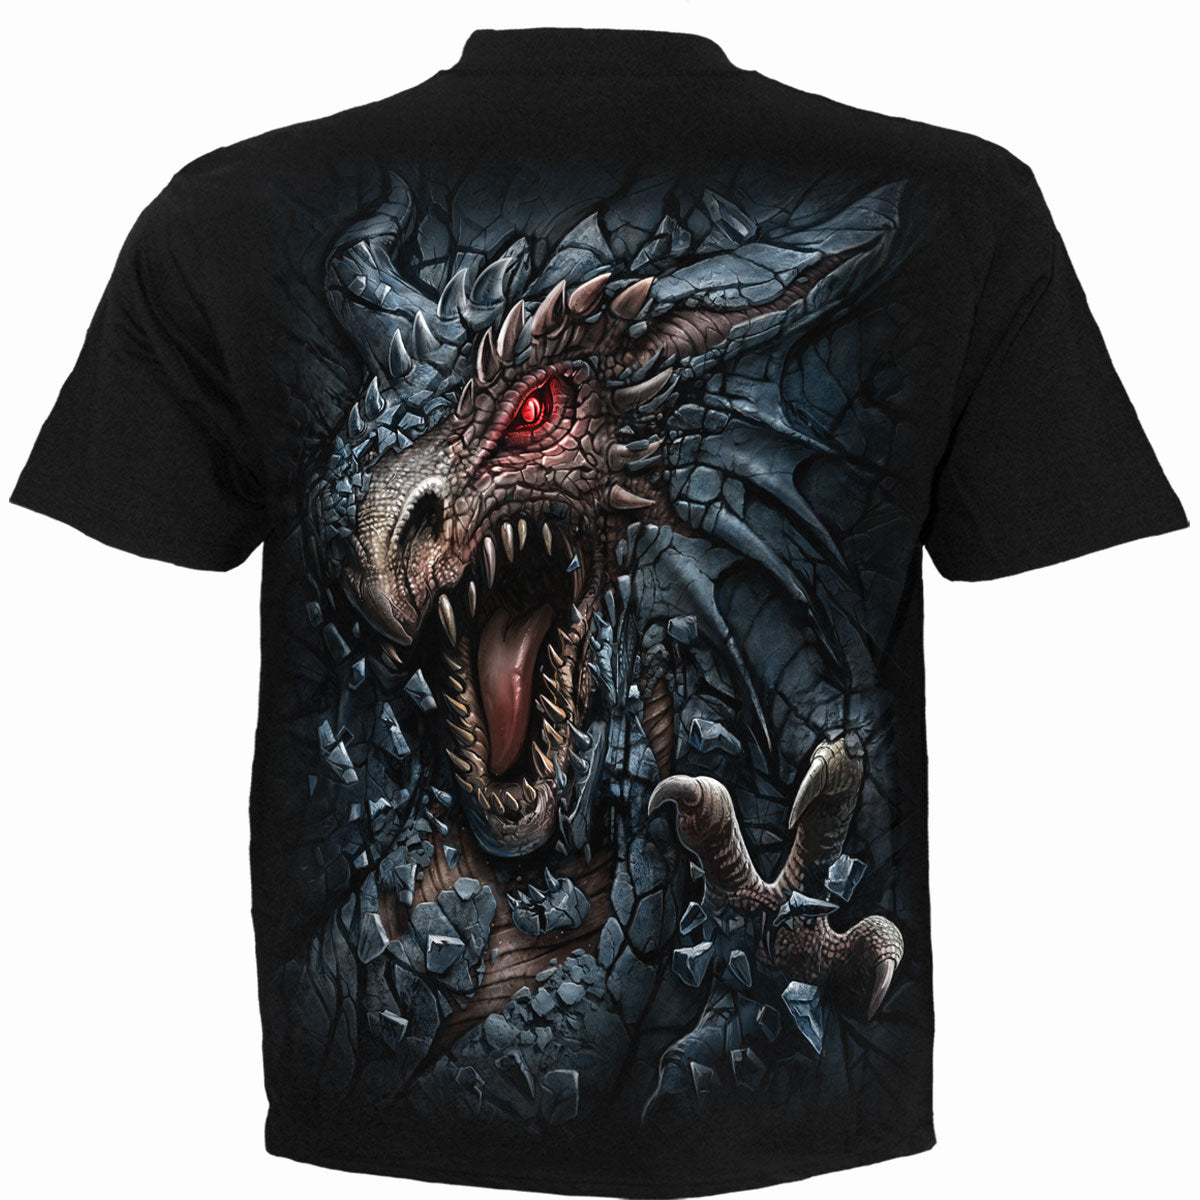 DRAGON'S LAIR - Koszulka dziecięca czarna